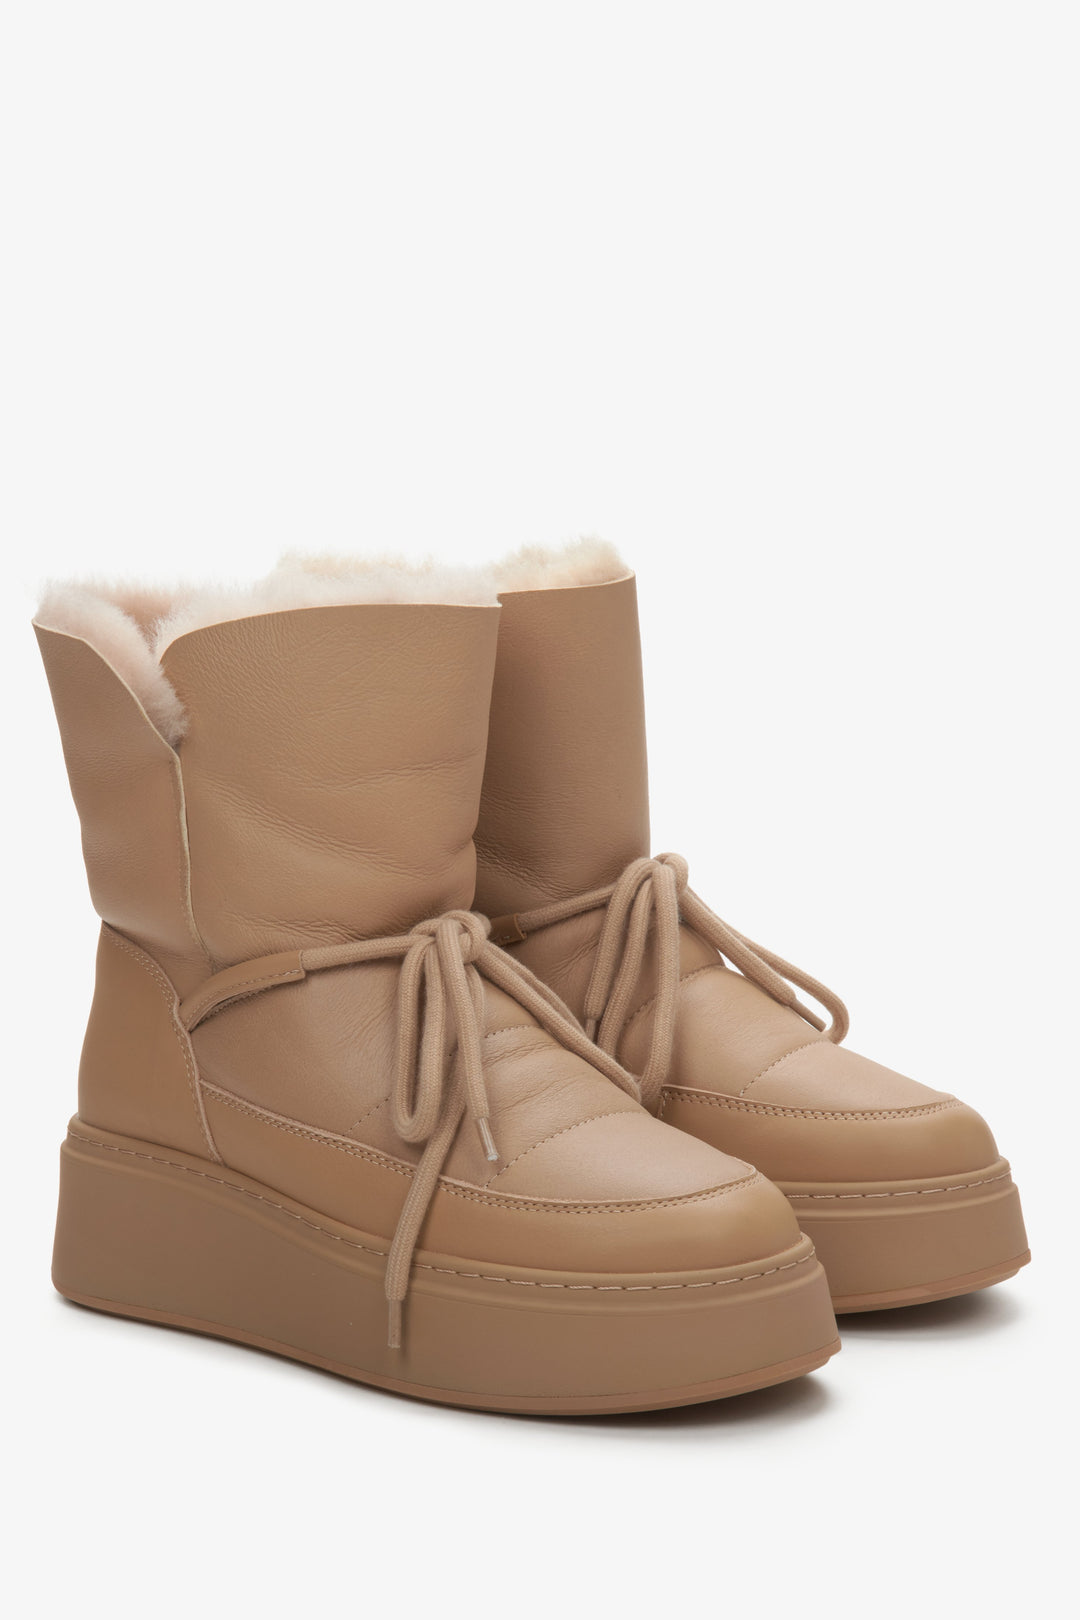 Women's brown snow boots Estro.